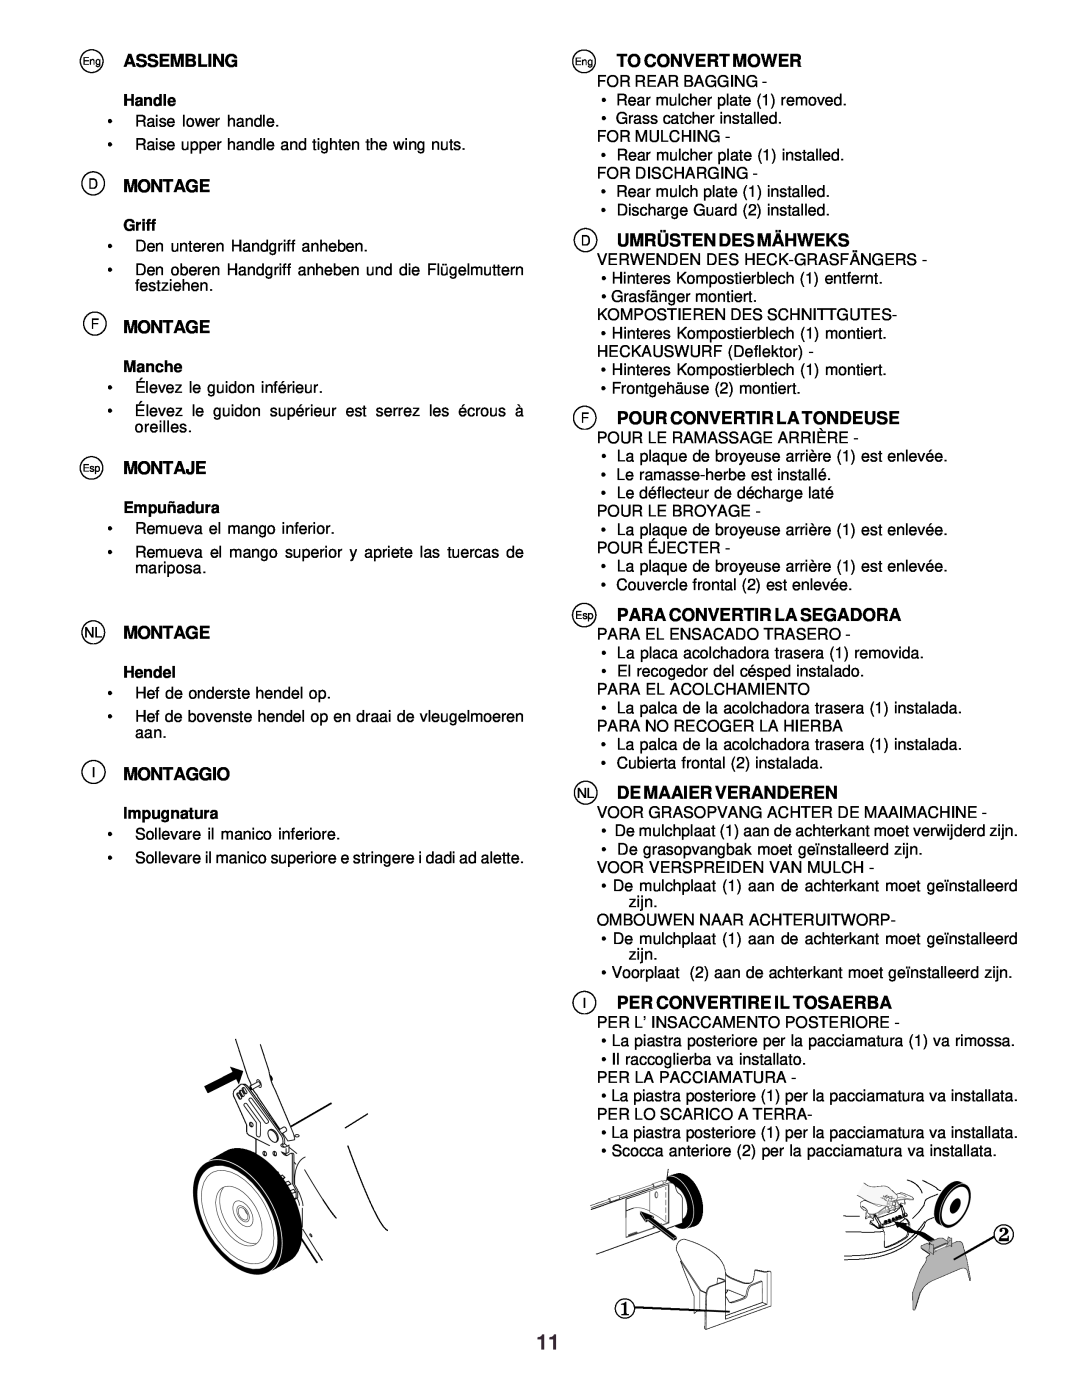 Husqvarna R52 instruction manual Eng ASSEMBLING 